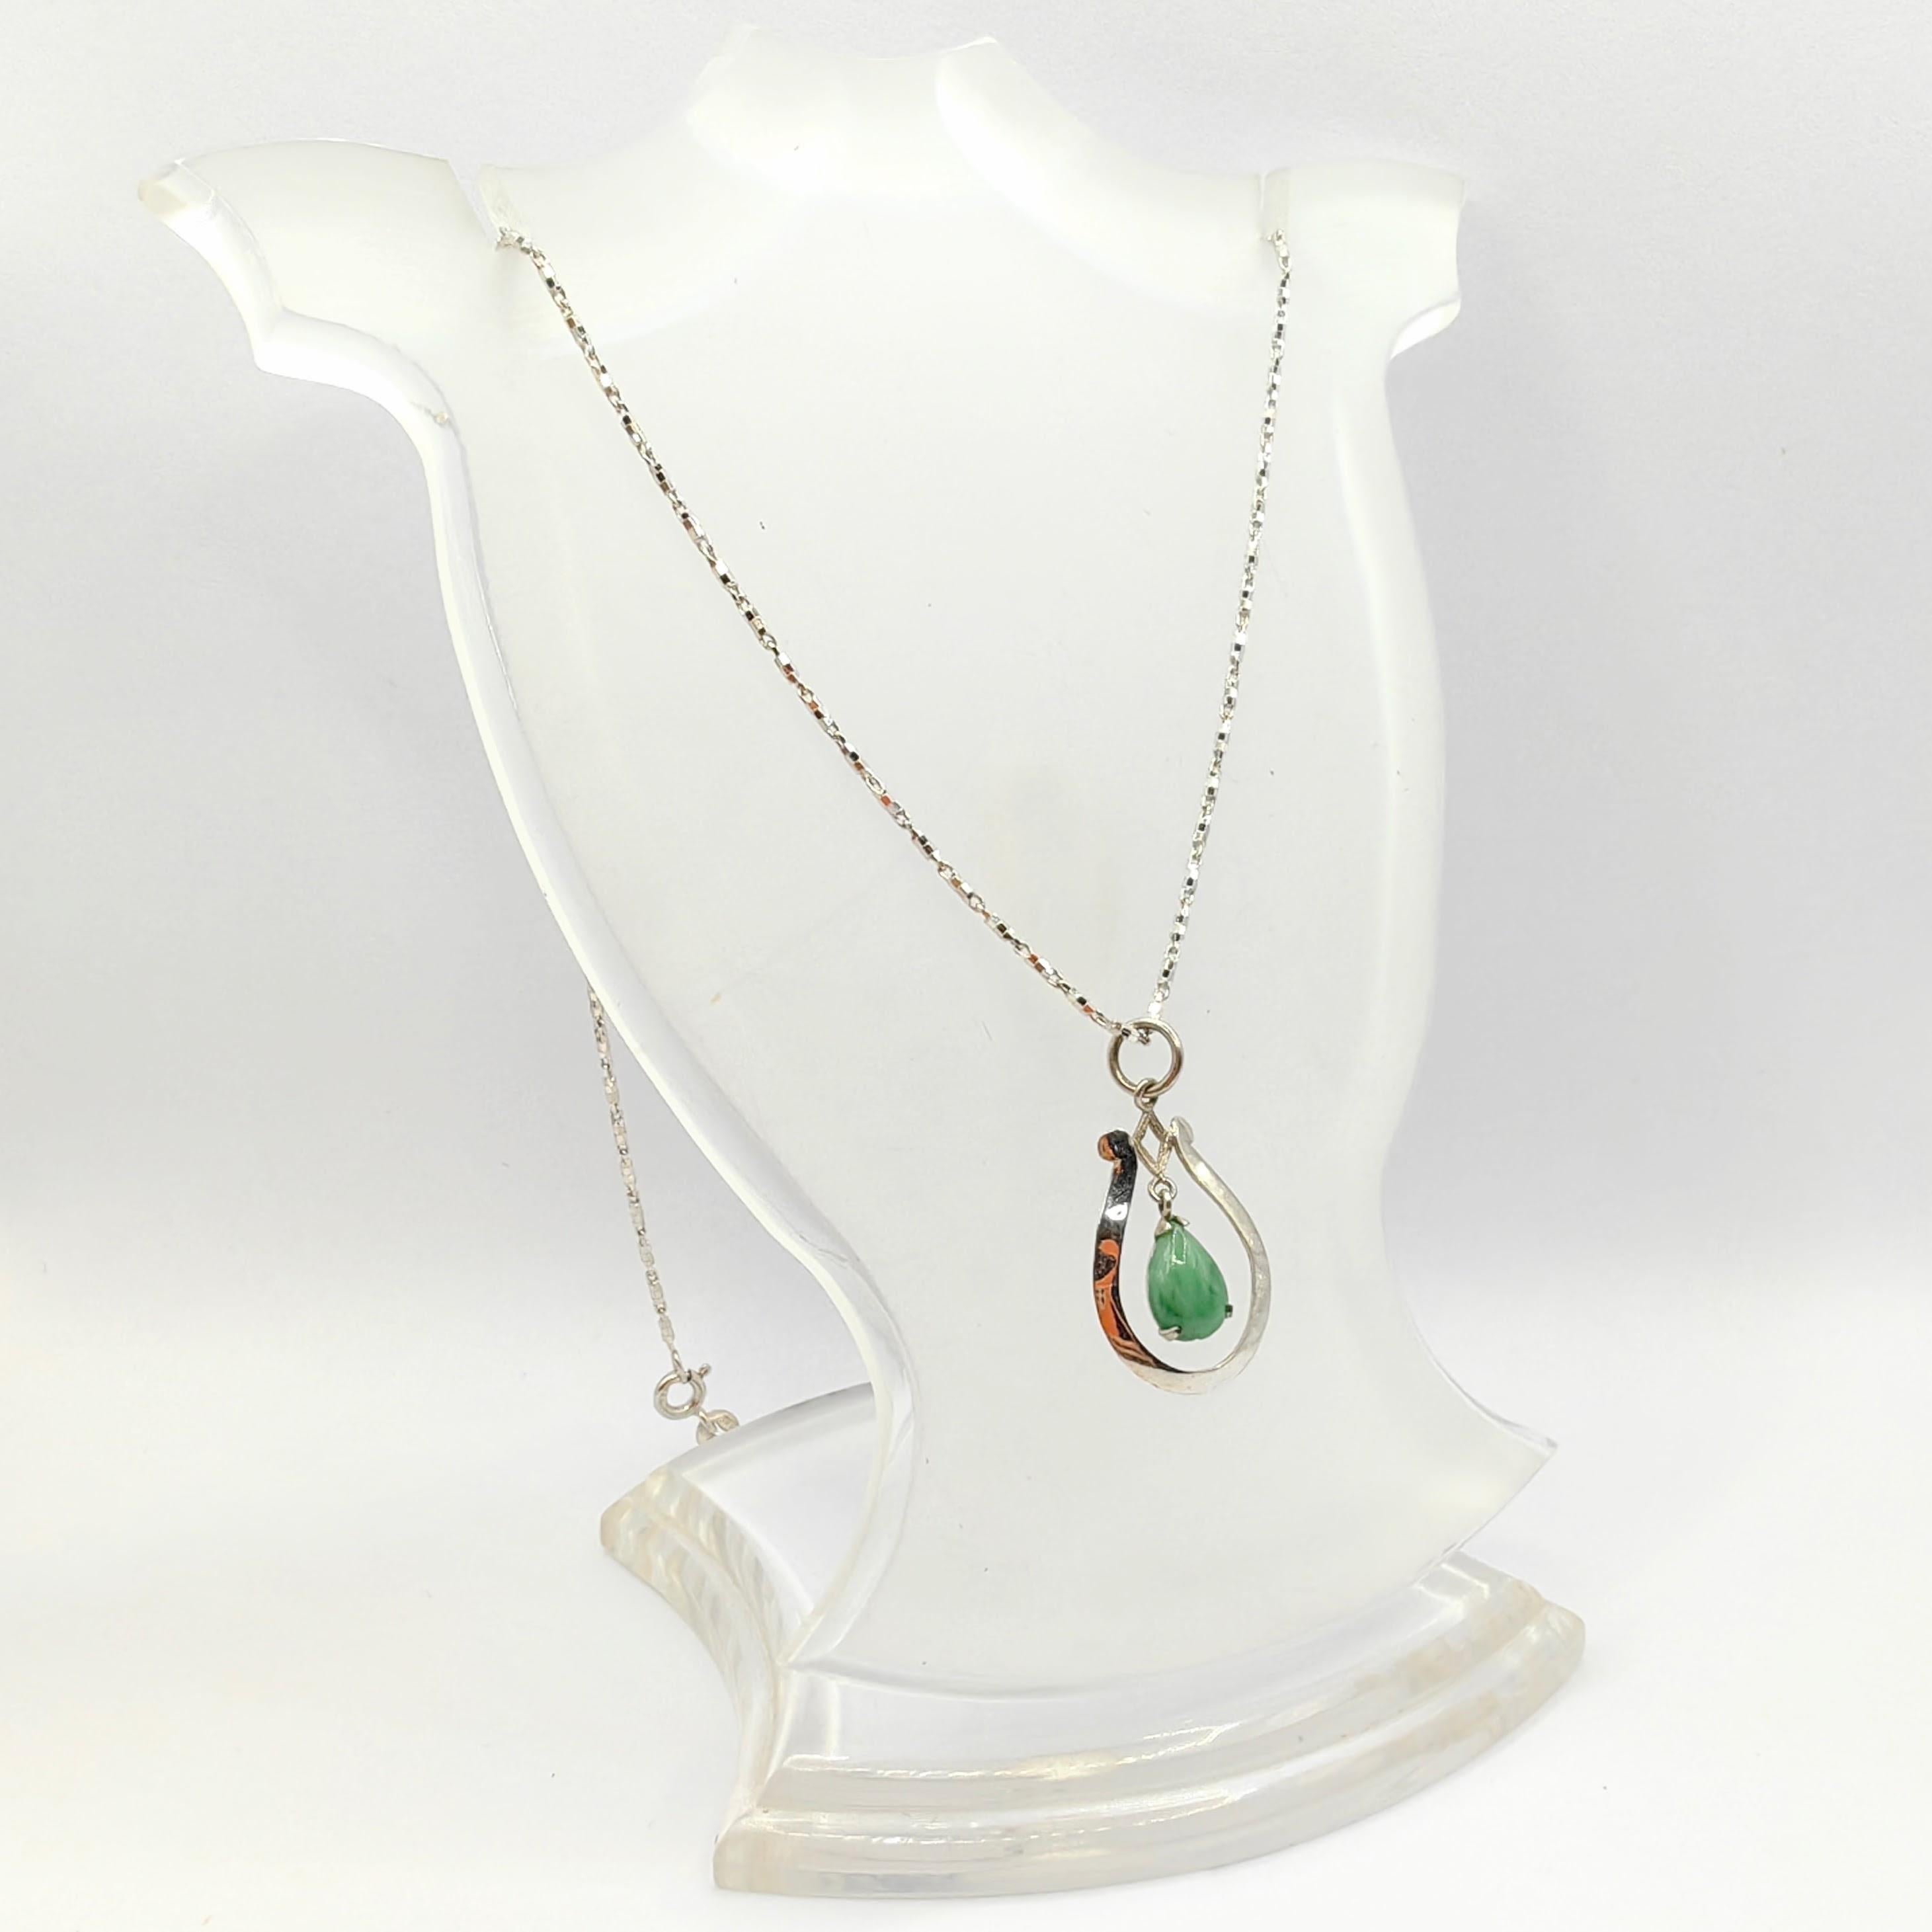 Vintage Pear Shaped Teardrop Jade Pendant in Sterling Silver For Sale 2